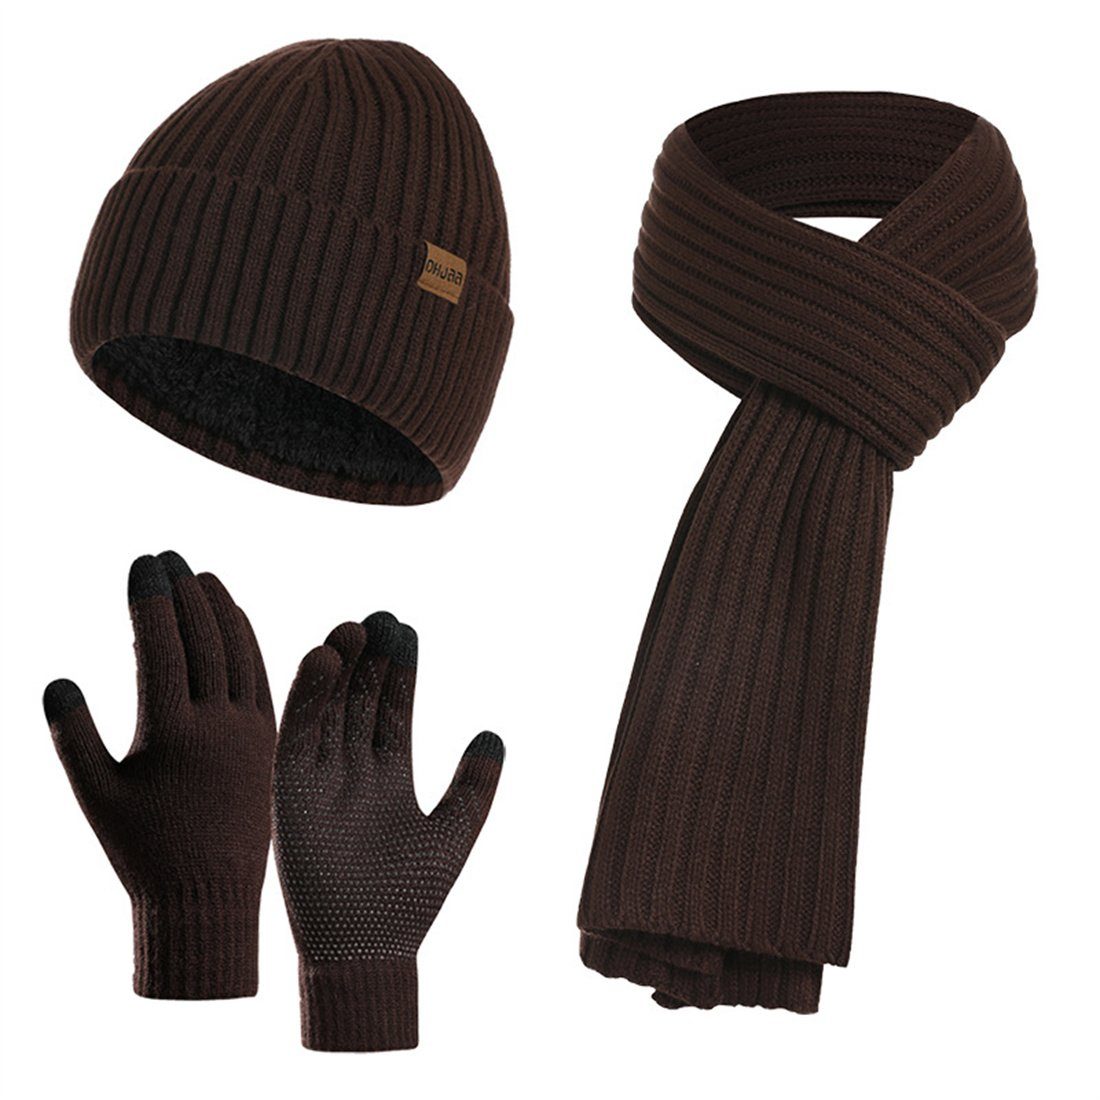 DÖRÖY Strickmütze Unisex Winter Strickmütze, Solid Farbe Hut Schal Handschuhe 3er Set Kaffee | Strickmützen